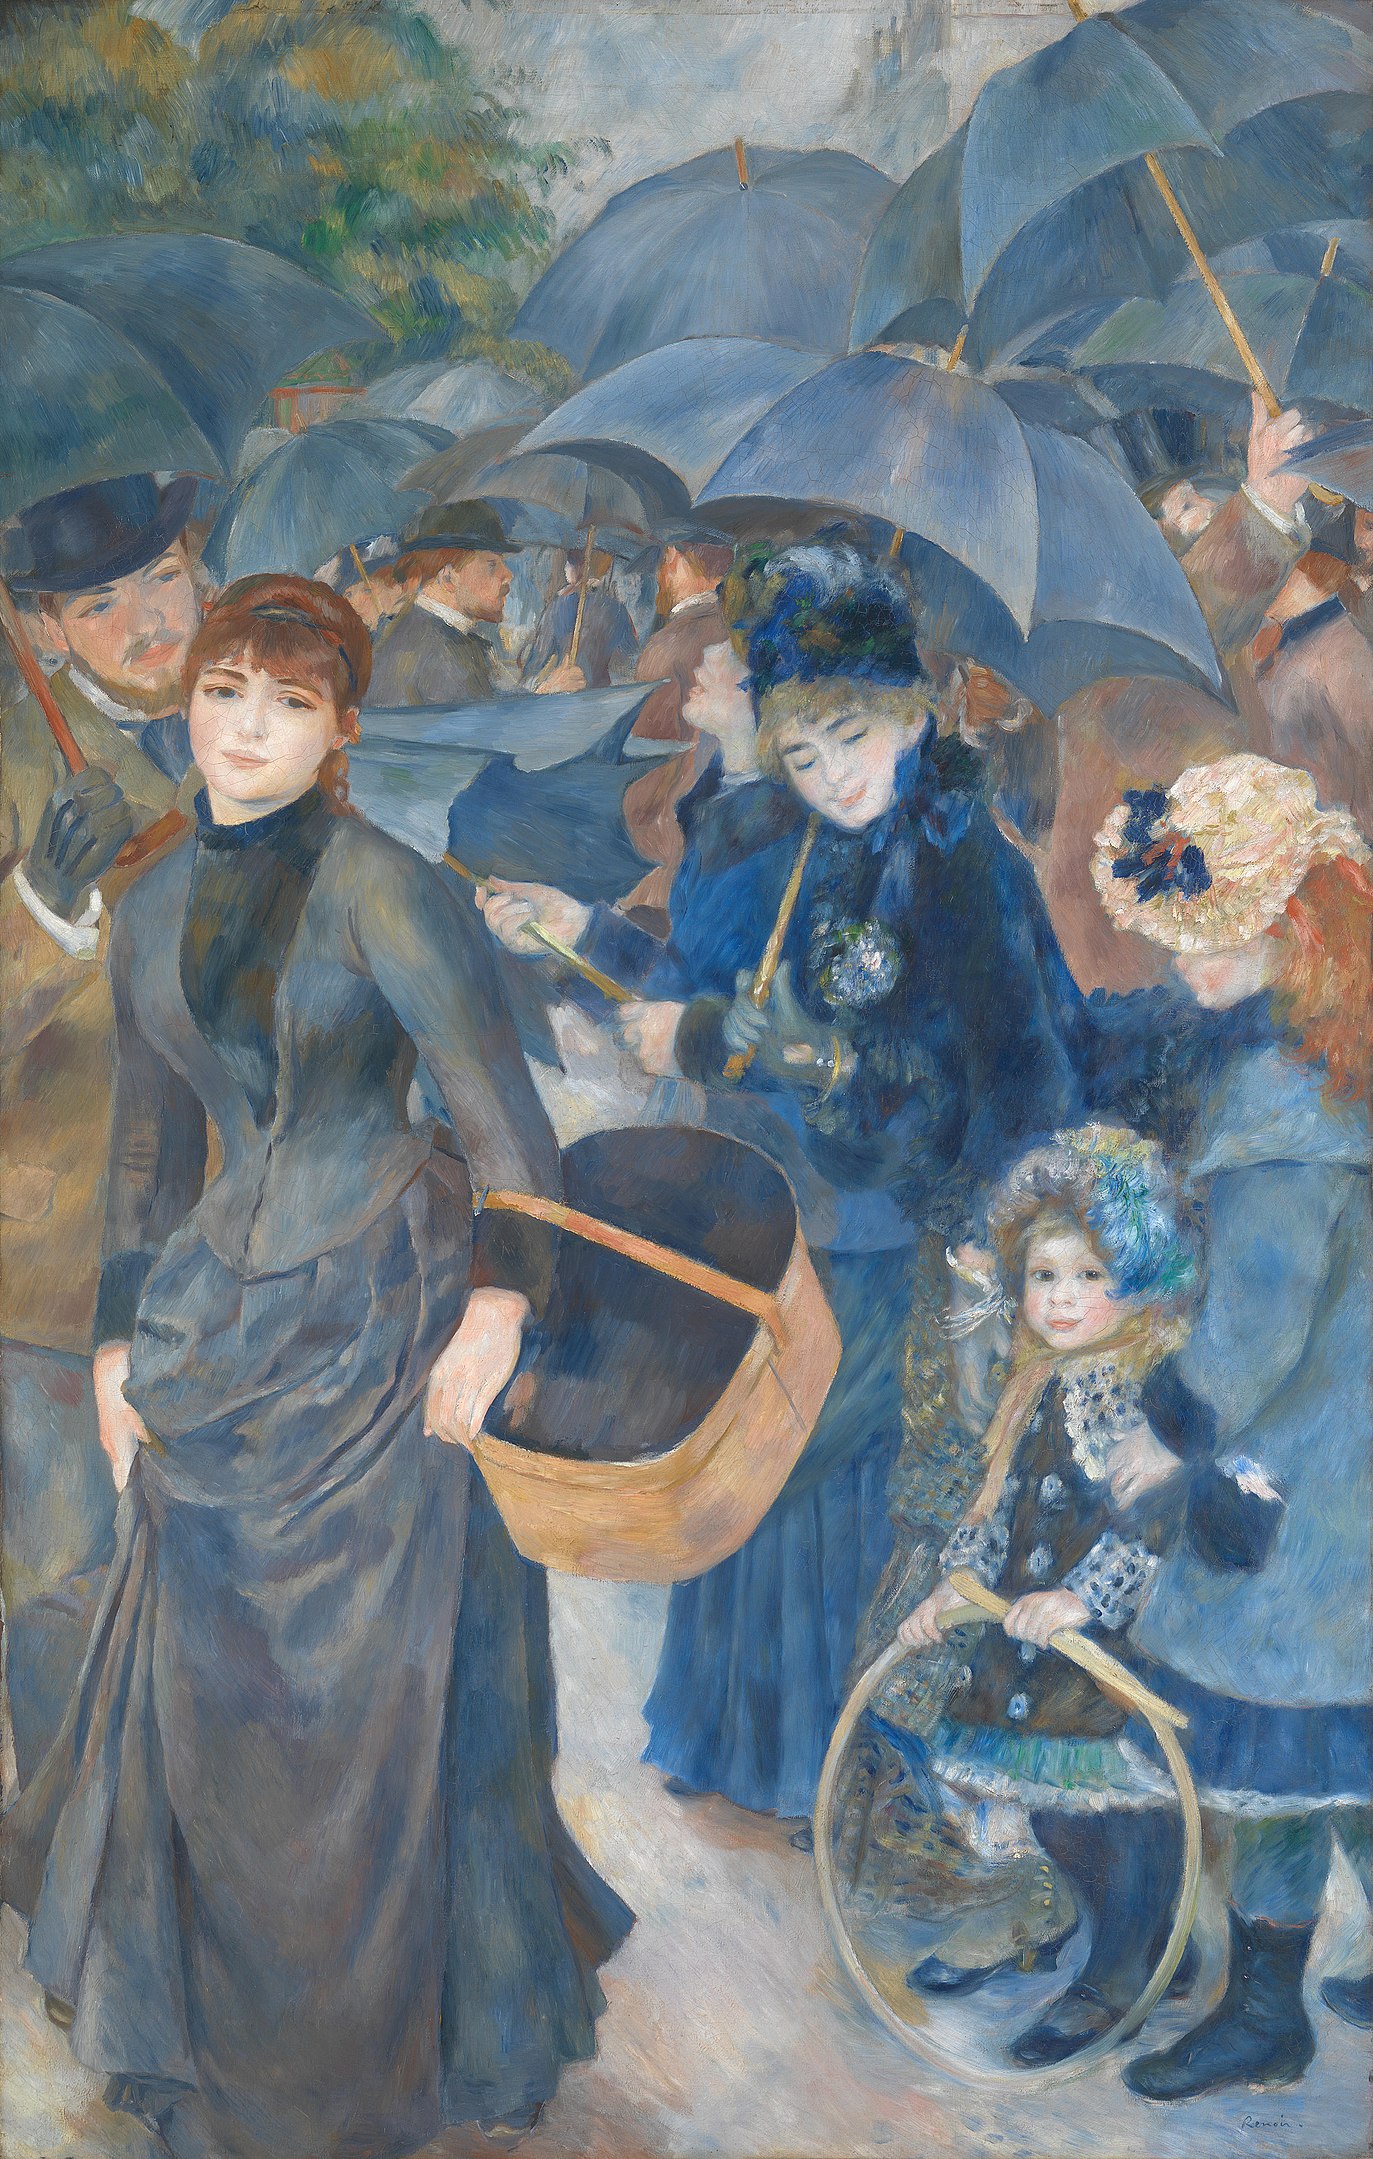 雨伞 by Pierre-Auguste Renoir - 約1880–1886 - 180.3 × 114.9 cm 